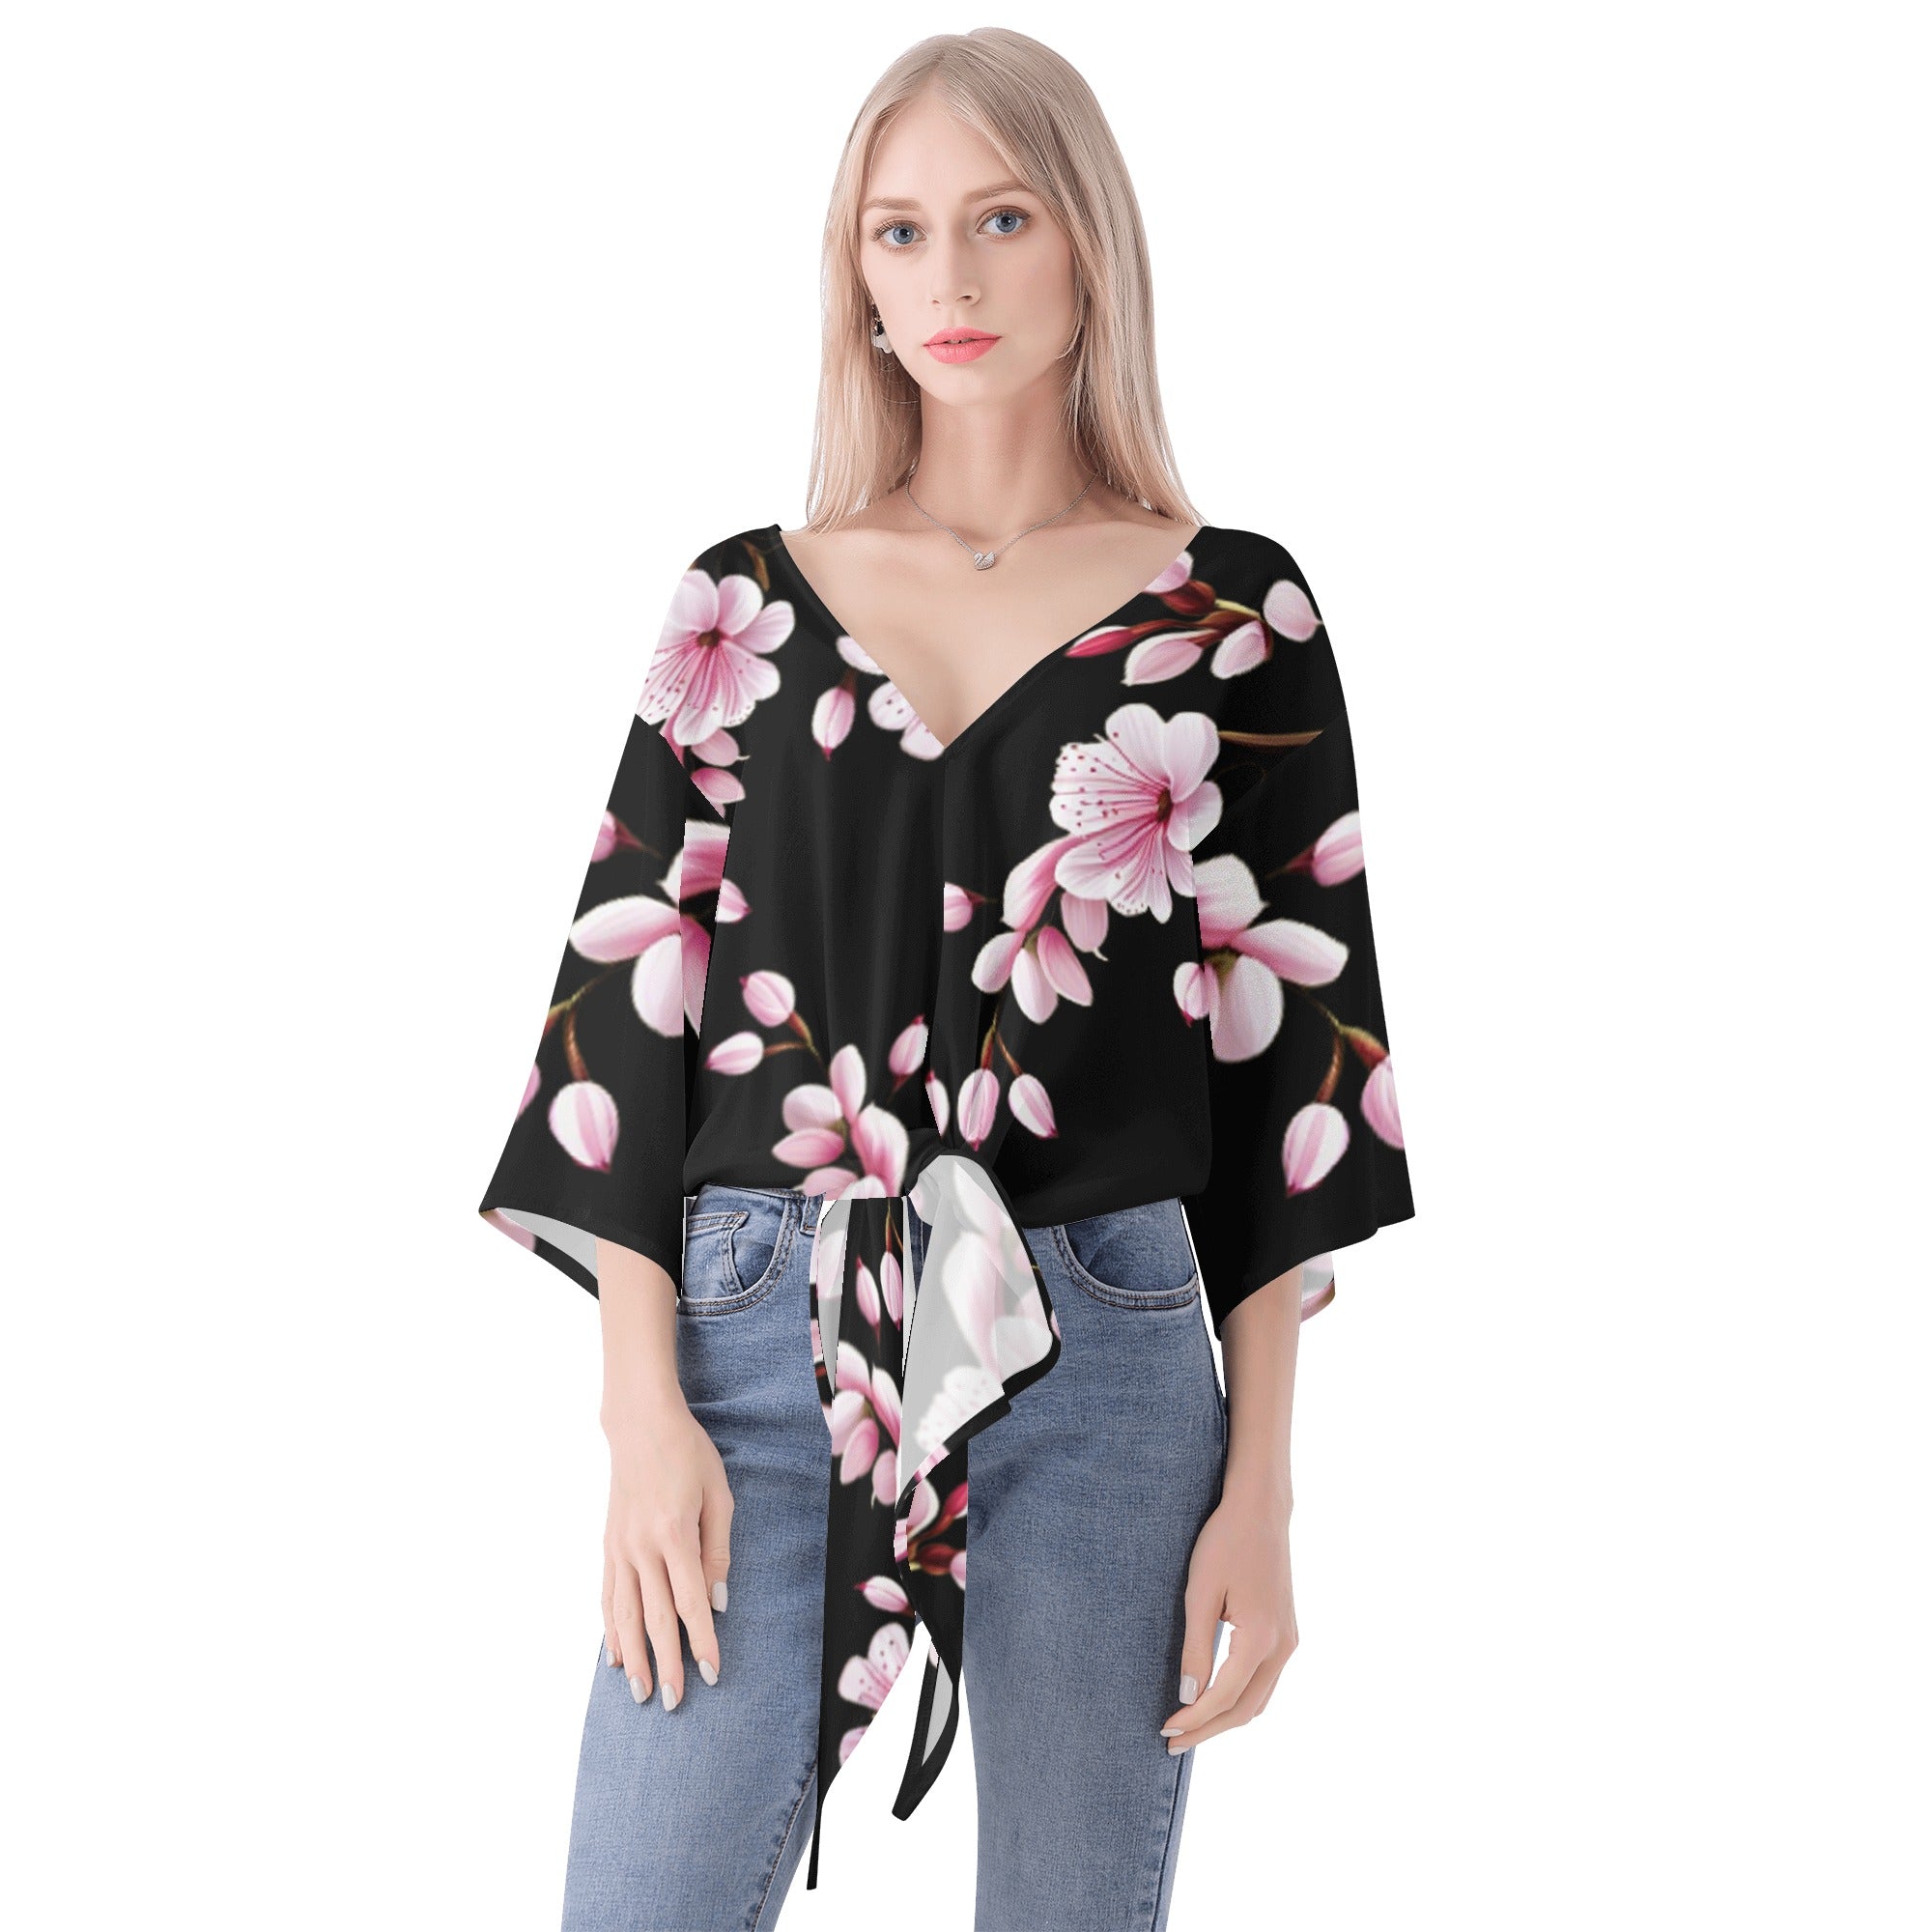 2 - Black Cherry Blossom Women‘s’ V-neck Streamers Blouse - 4 colors - women's blouse at TFC&H Co.